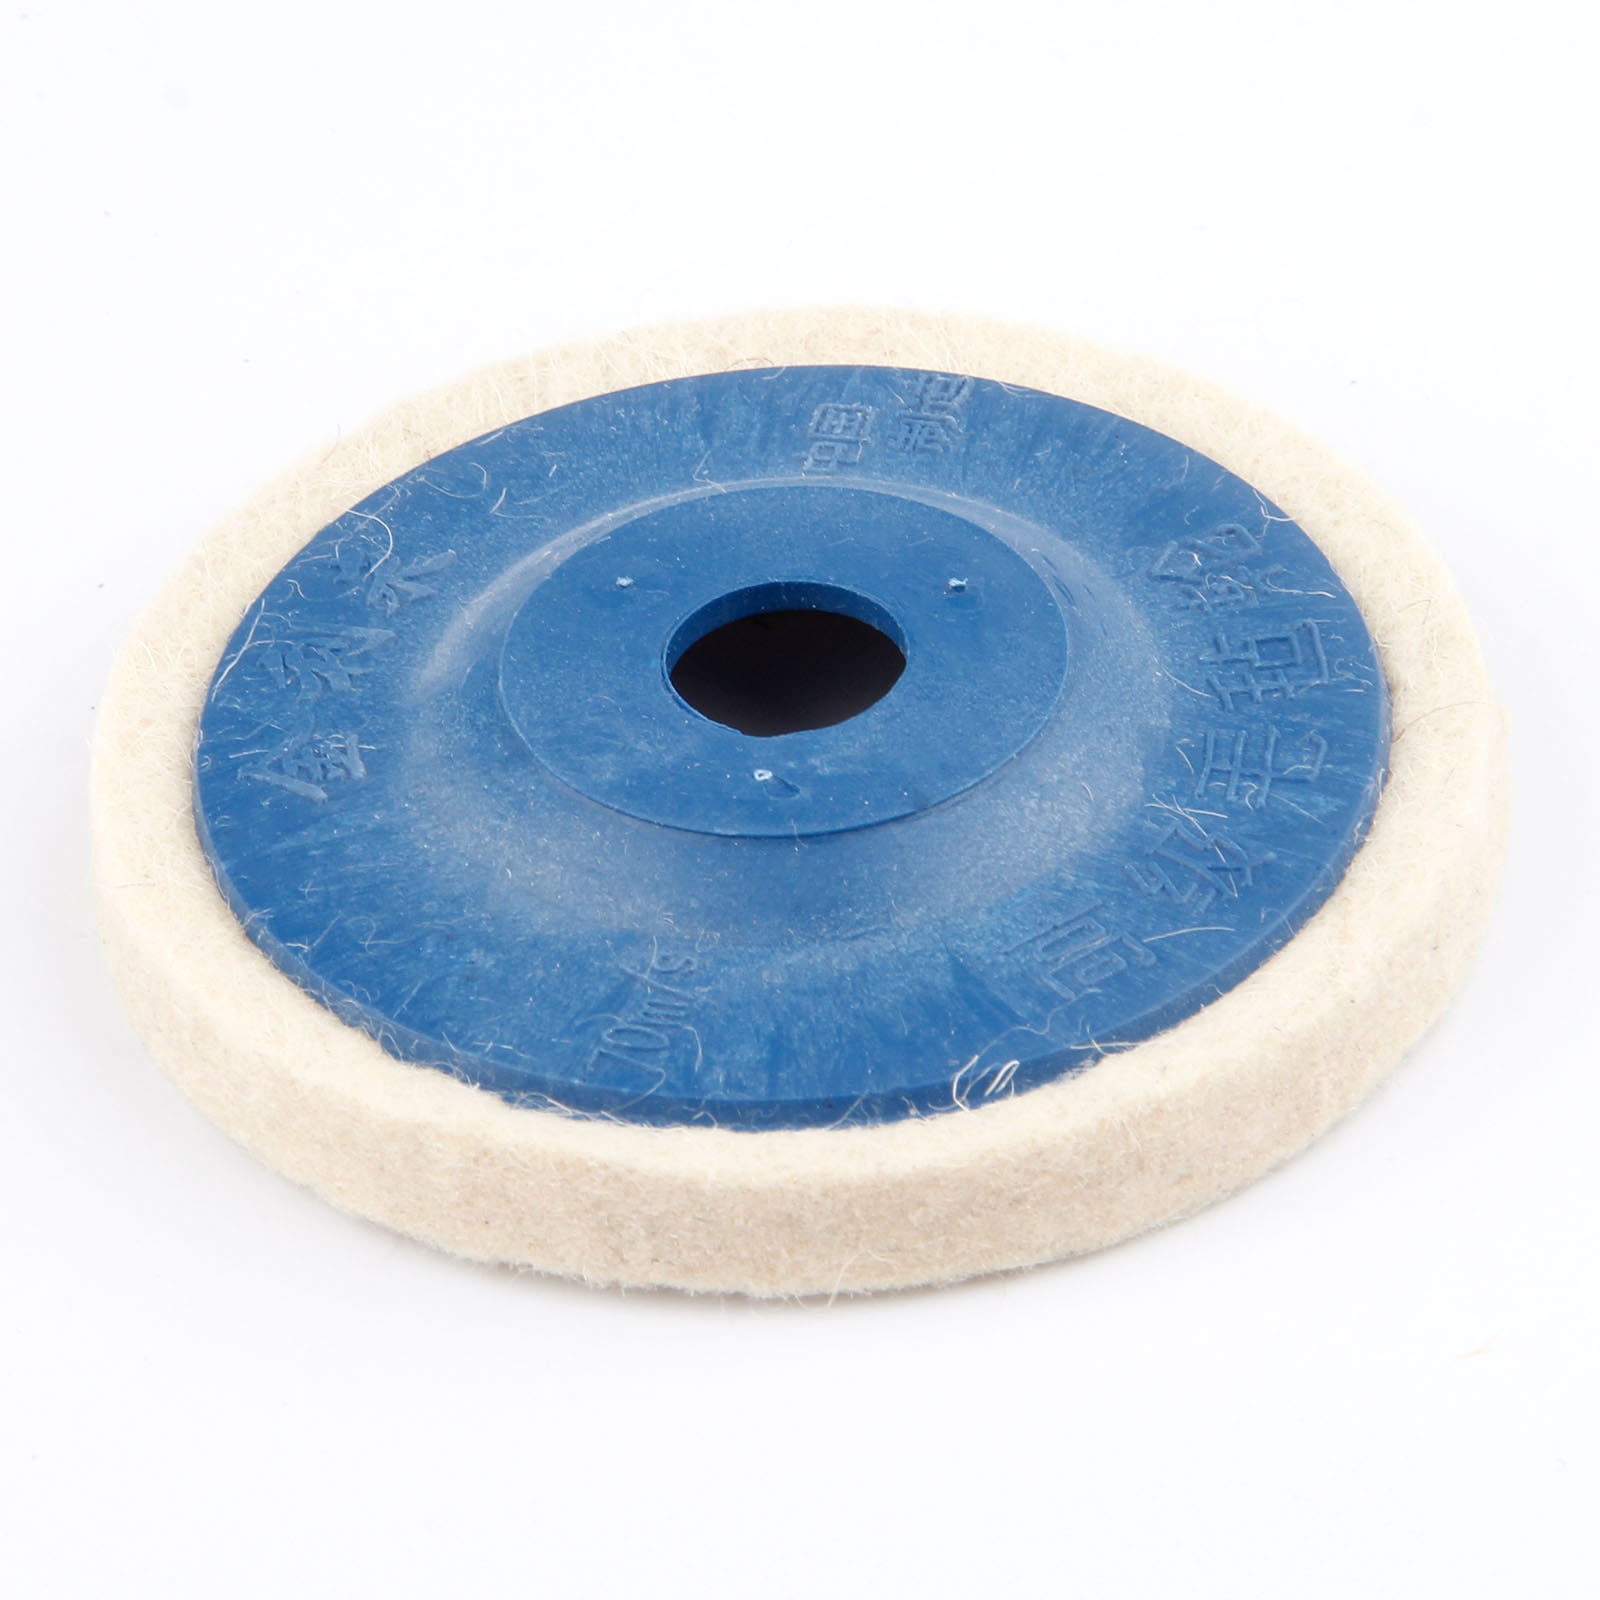 1x 100mm Wool Polishing Wheel Buffing Pads Angle Grinder Wheel Felt Polishing Disc Polisher For Ceramic Metal Glass Plastic